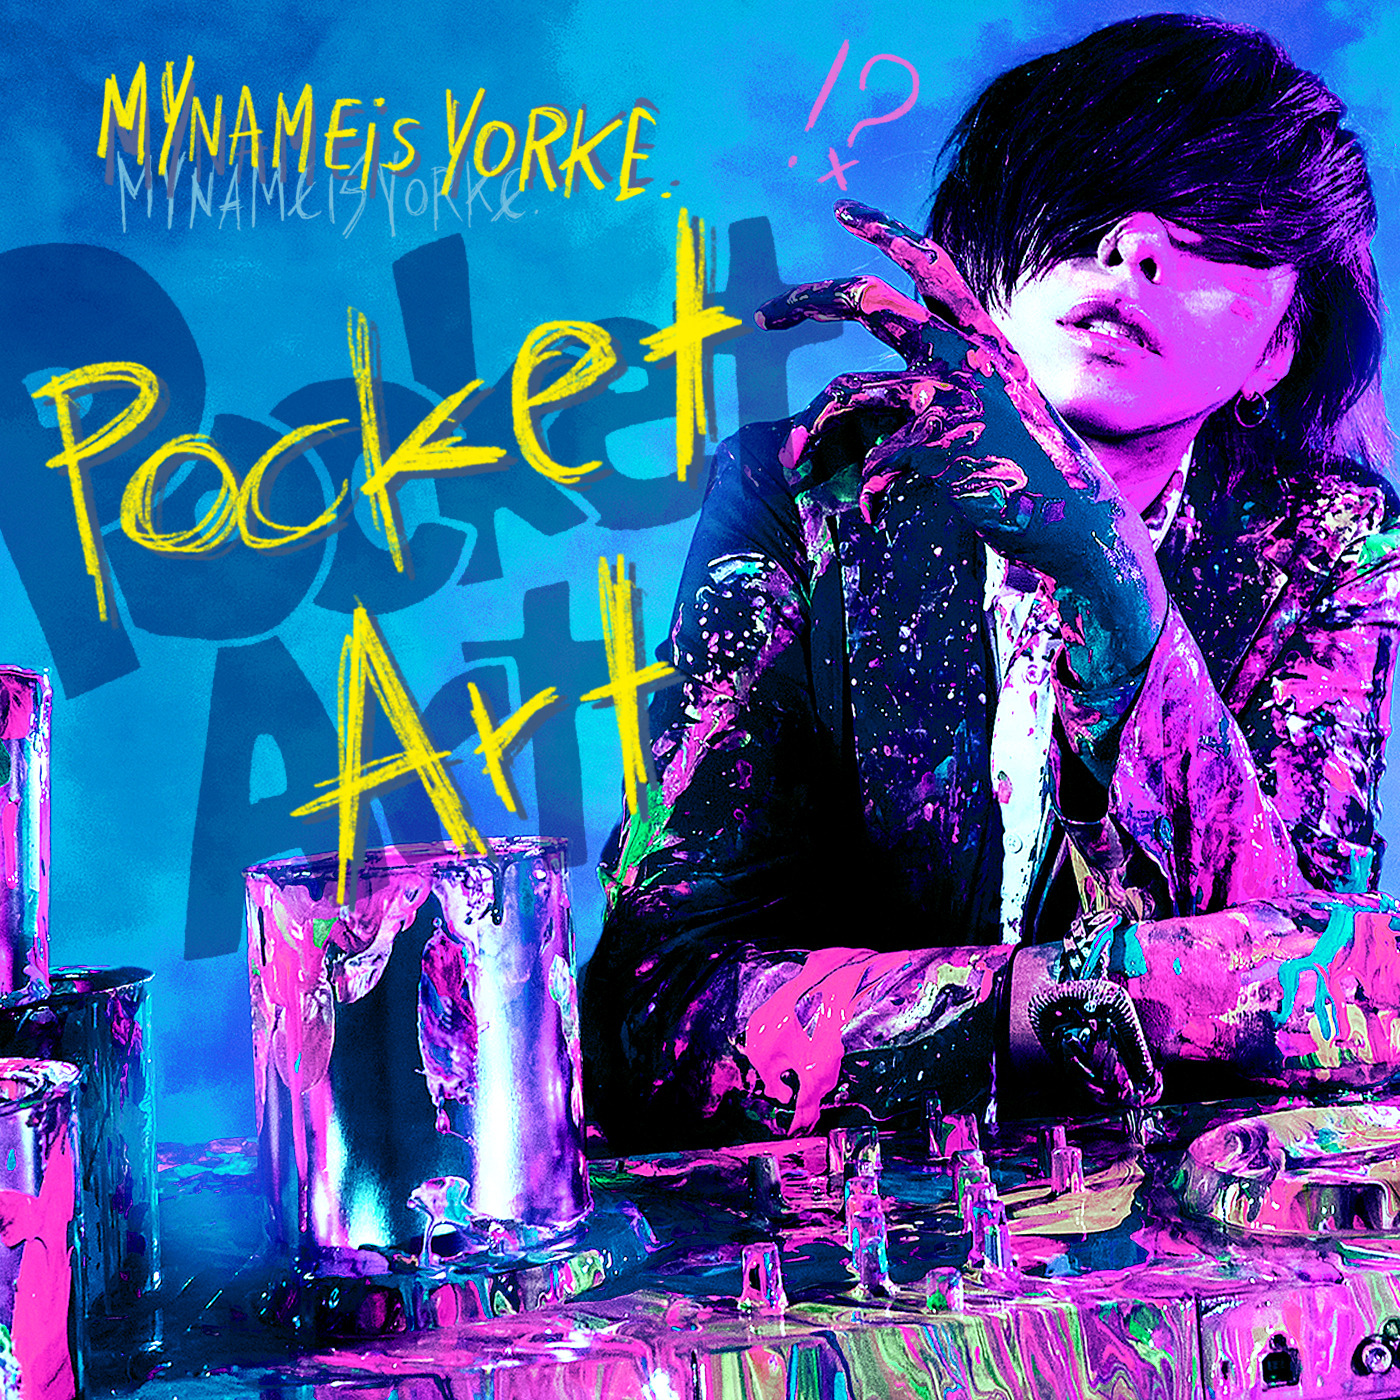 #2 YORKE. Pocket Art